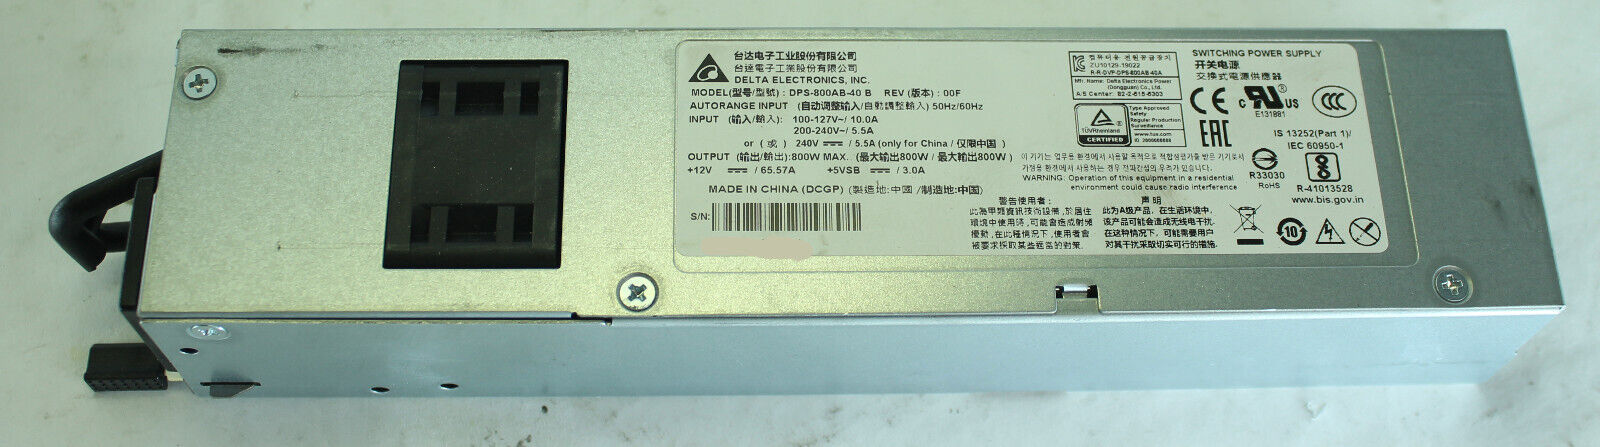 Delta Electronics DPS-800AB-40 B Rev 00F 800W Switching Power Supply